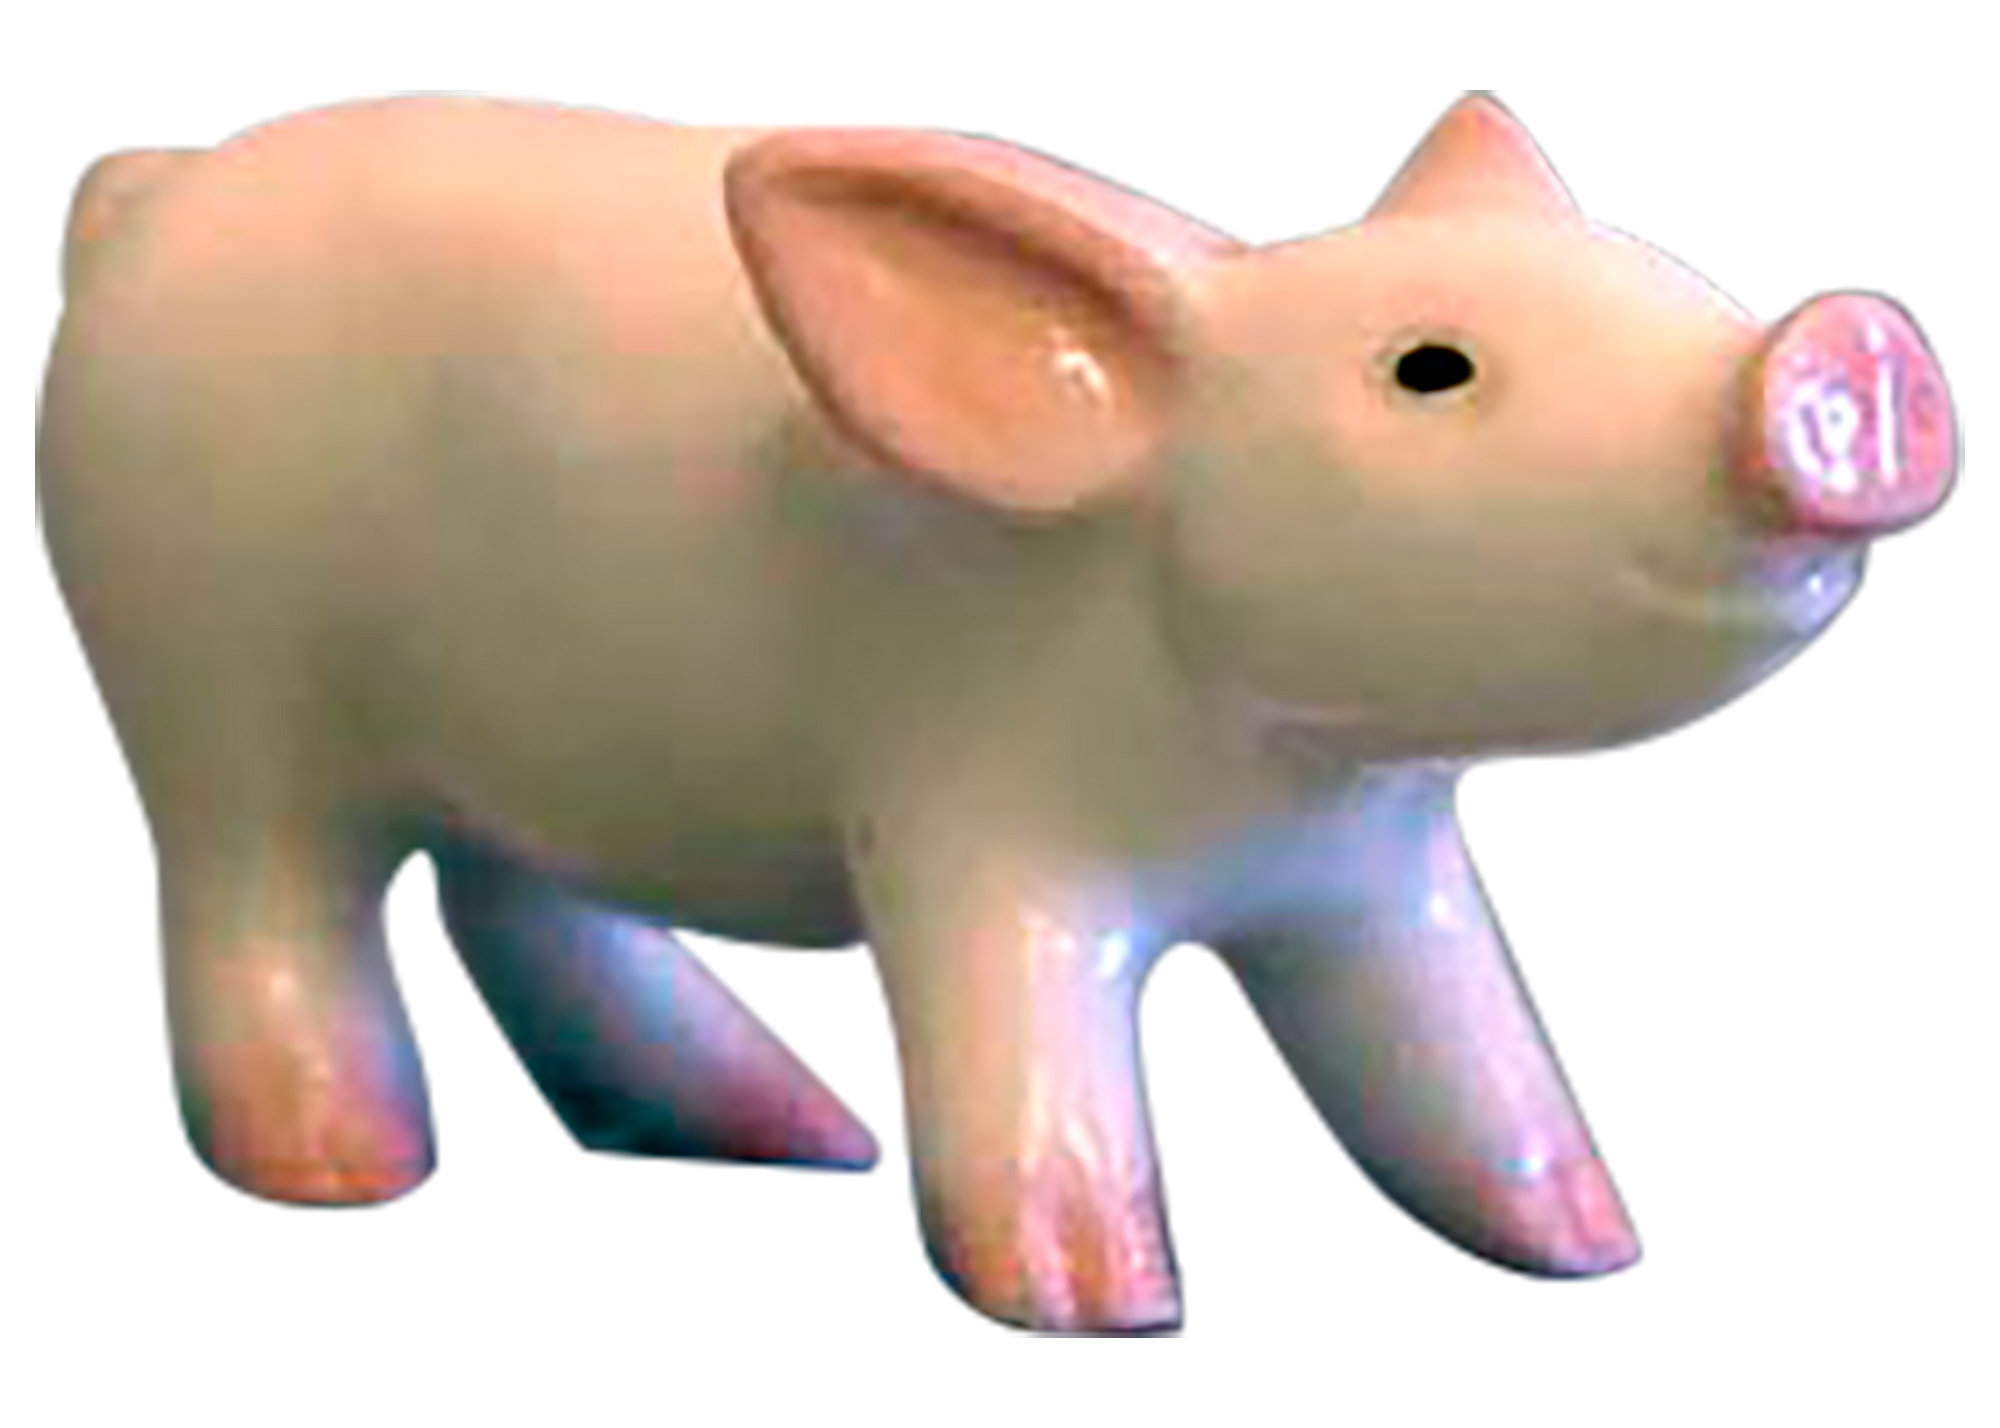 Buy Long Piglet Figurine at GoldenCockerel.com